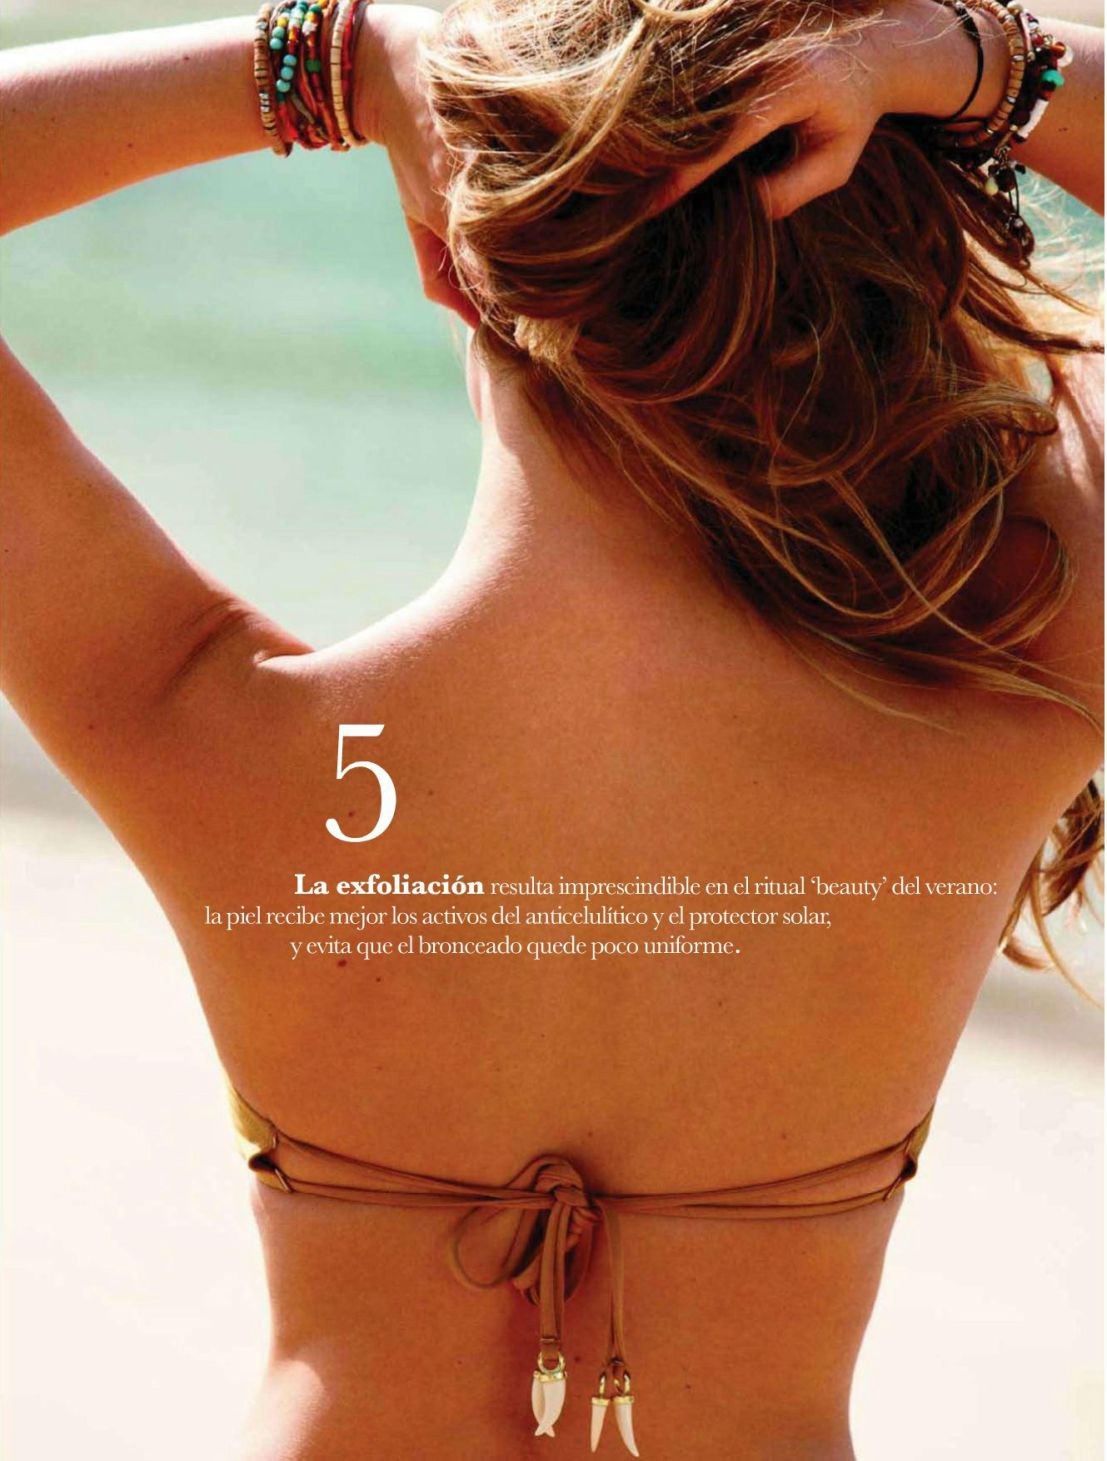 Bar Refaeli: May 2012 Elle Magazine (Spain) Photoshoot